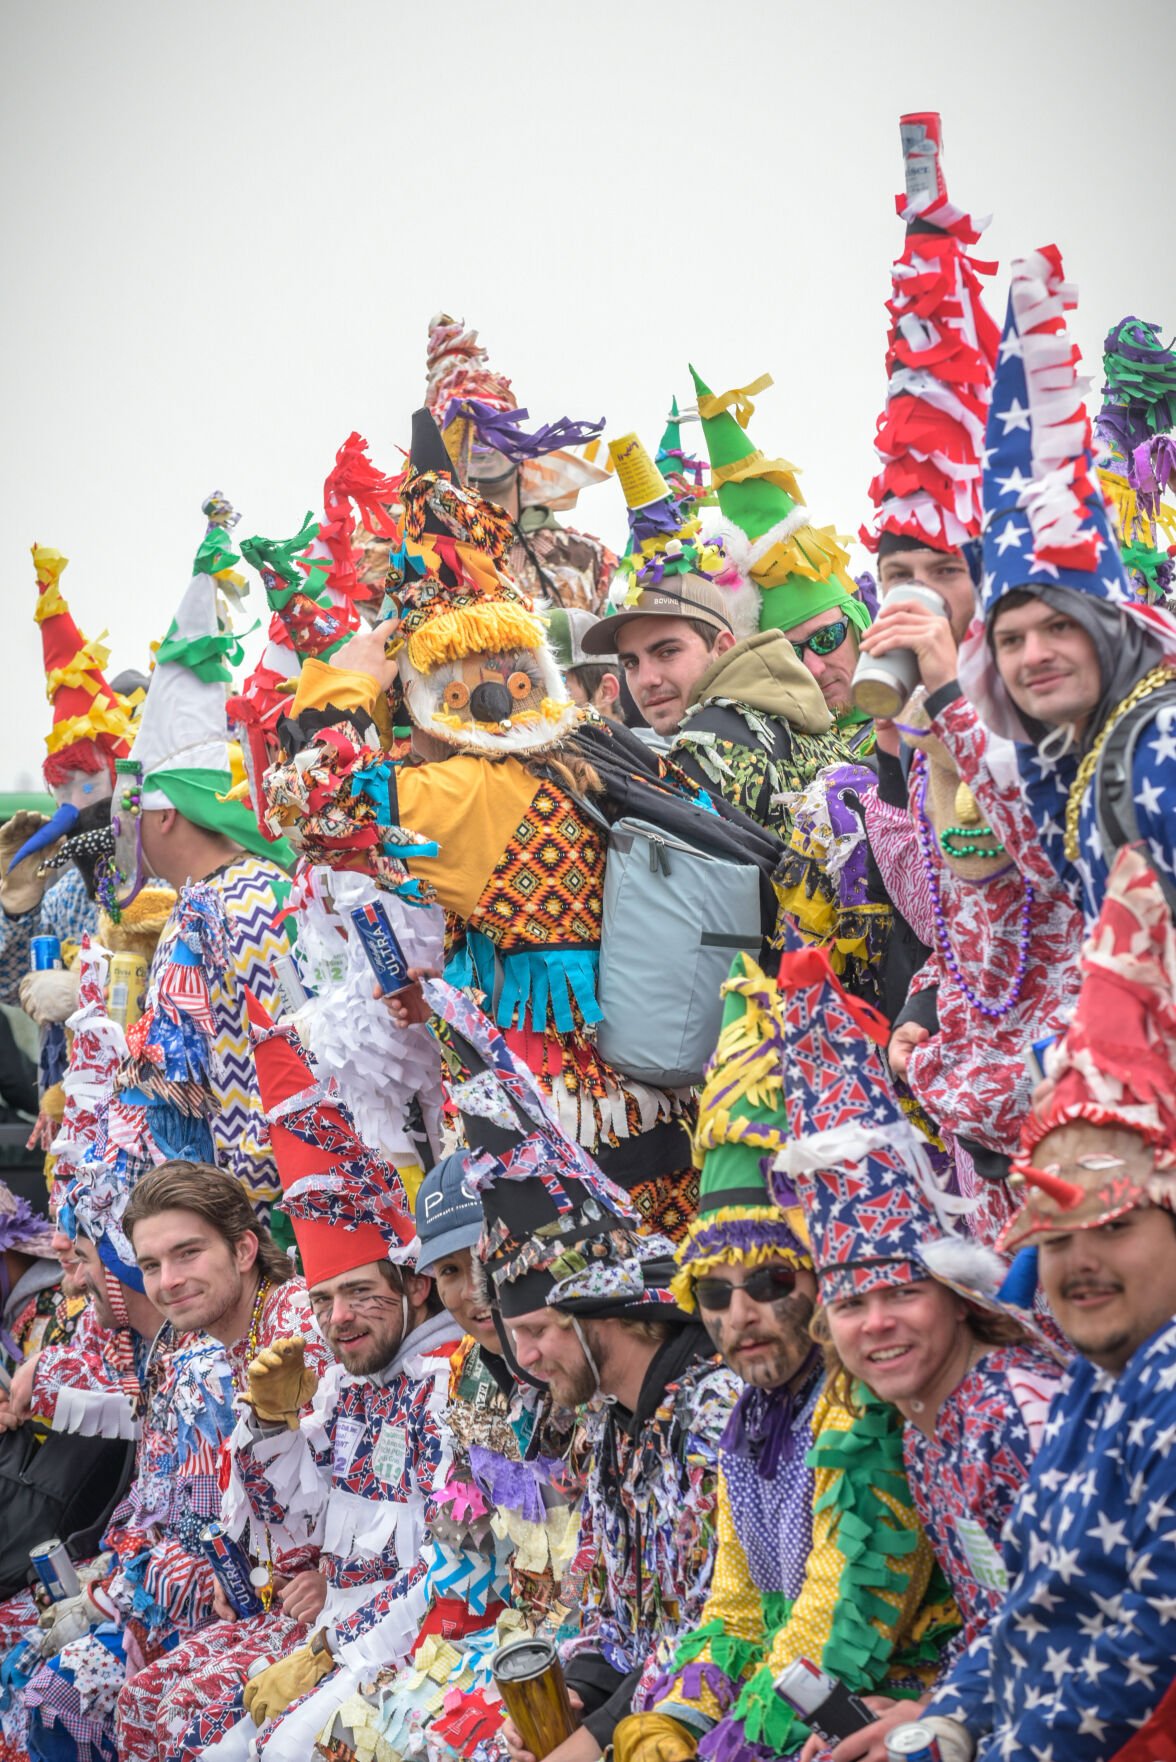 What are the origins of Mardi Gras costumes?